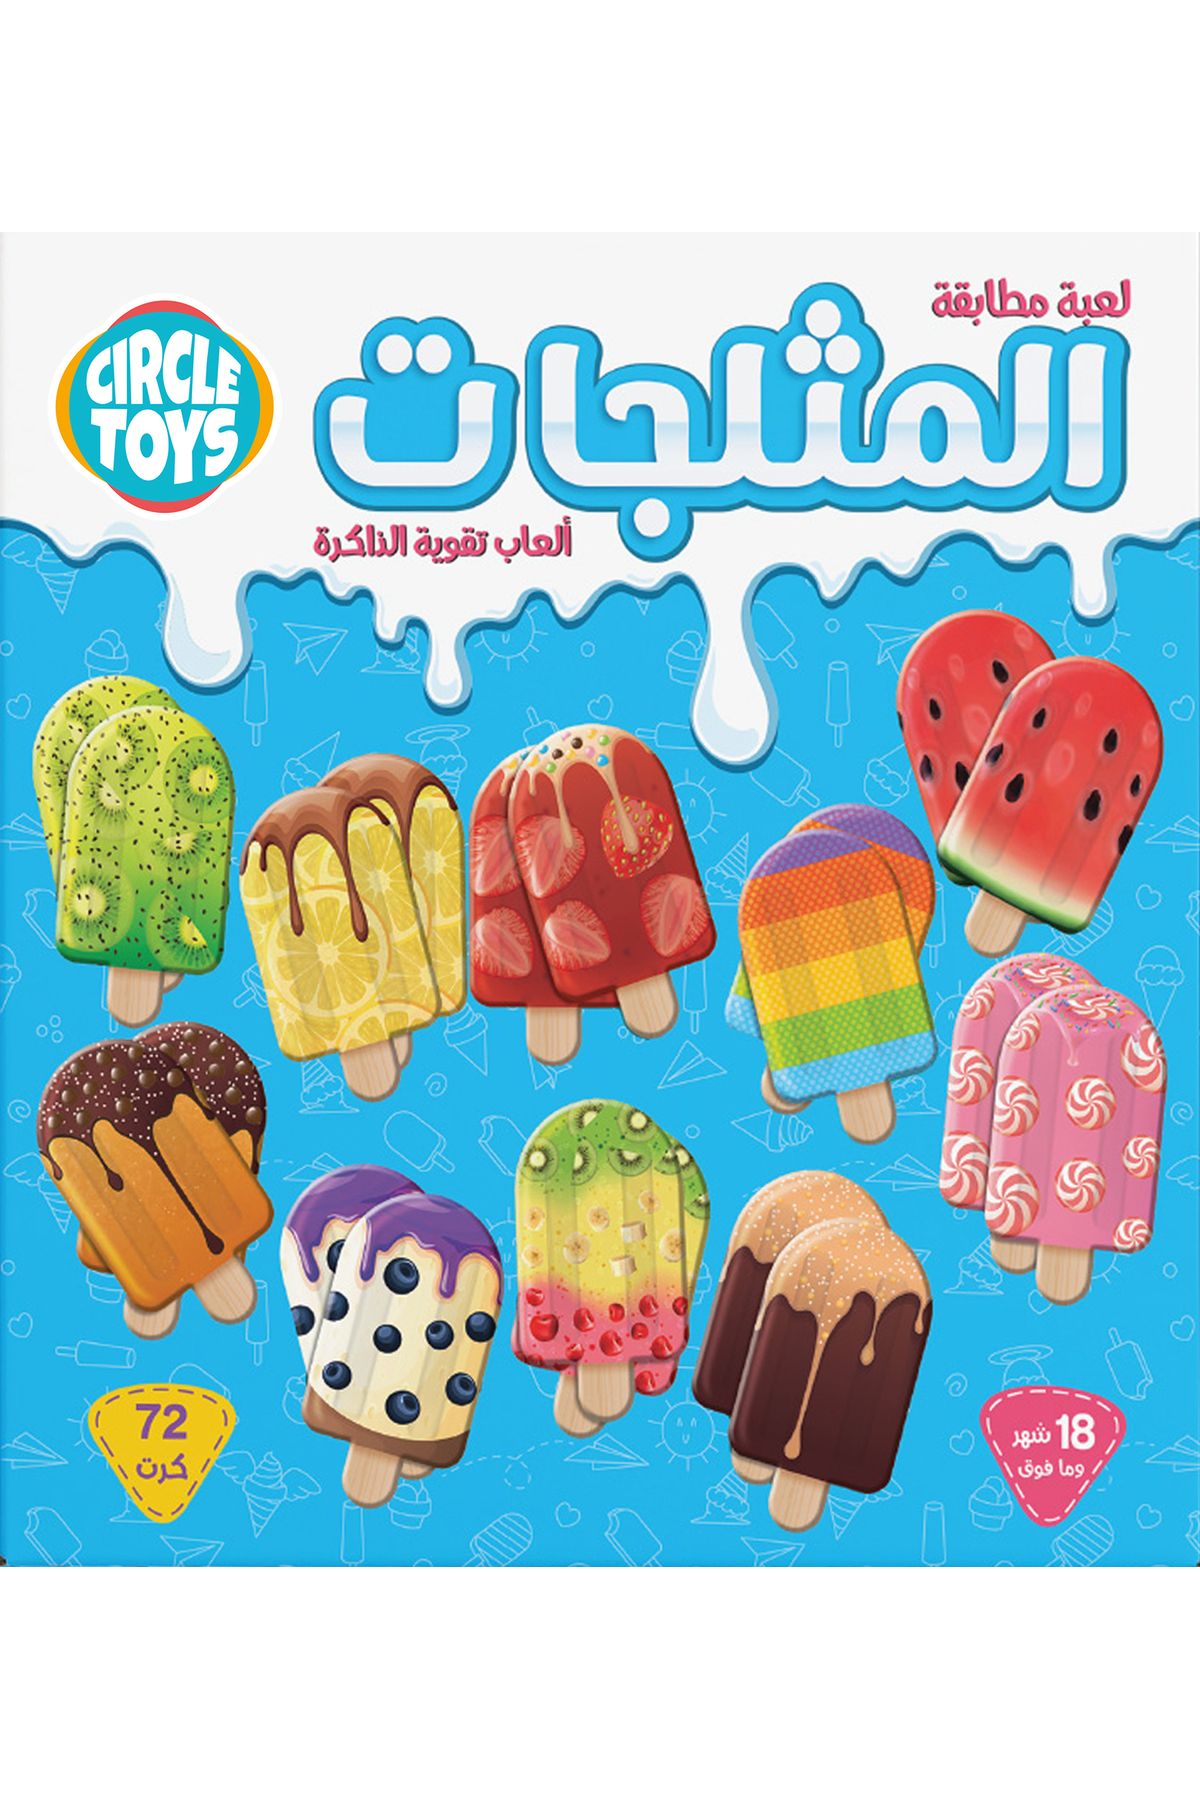 Circle Toys 1+ years baby Ice Cream Matching Game Puzzle Dondurma eşleştirme oyunu Arabic